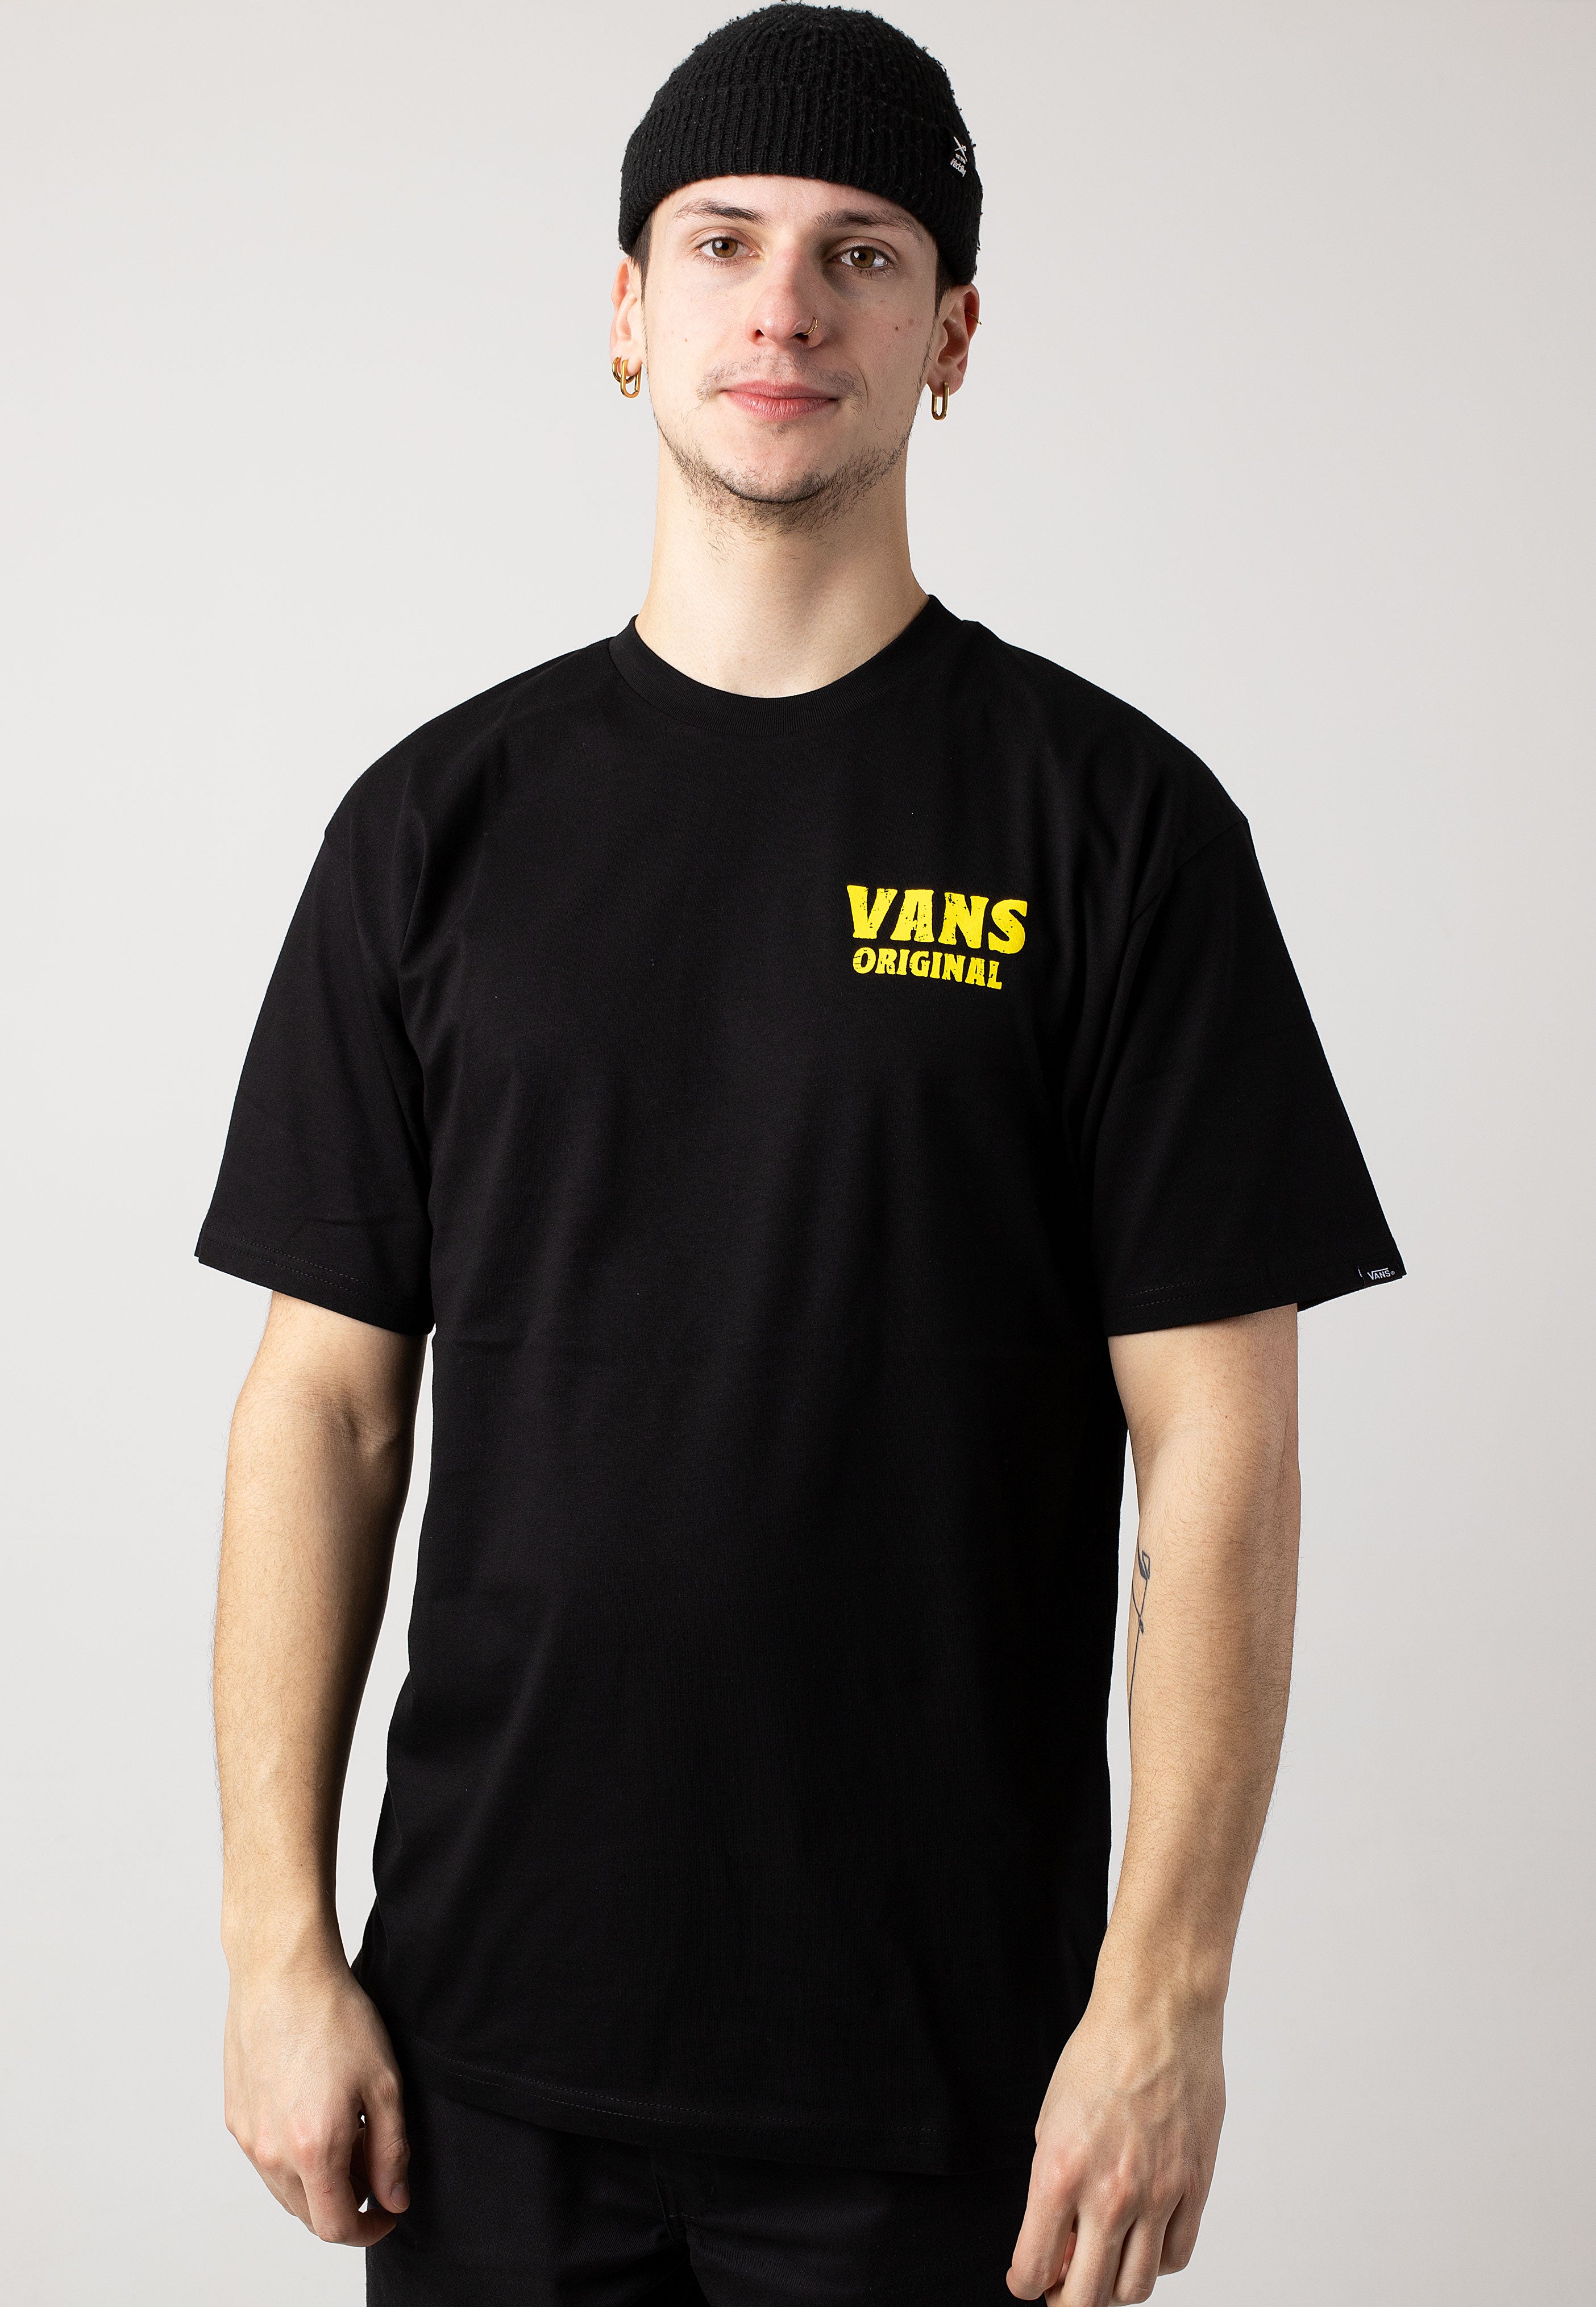 Vans - Wave Cheers Black - T-Shirt